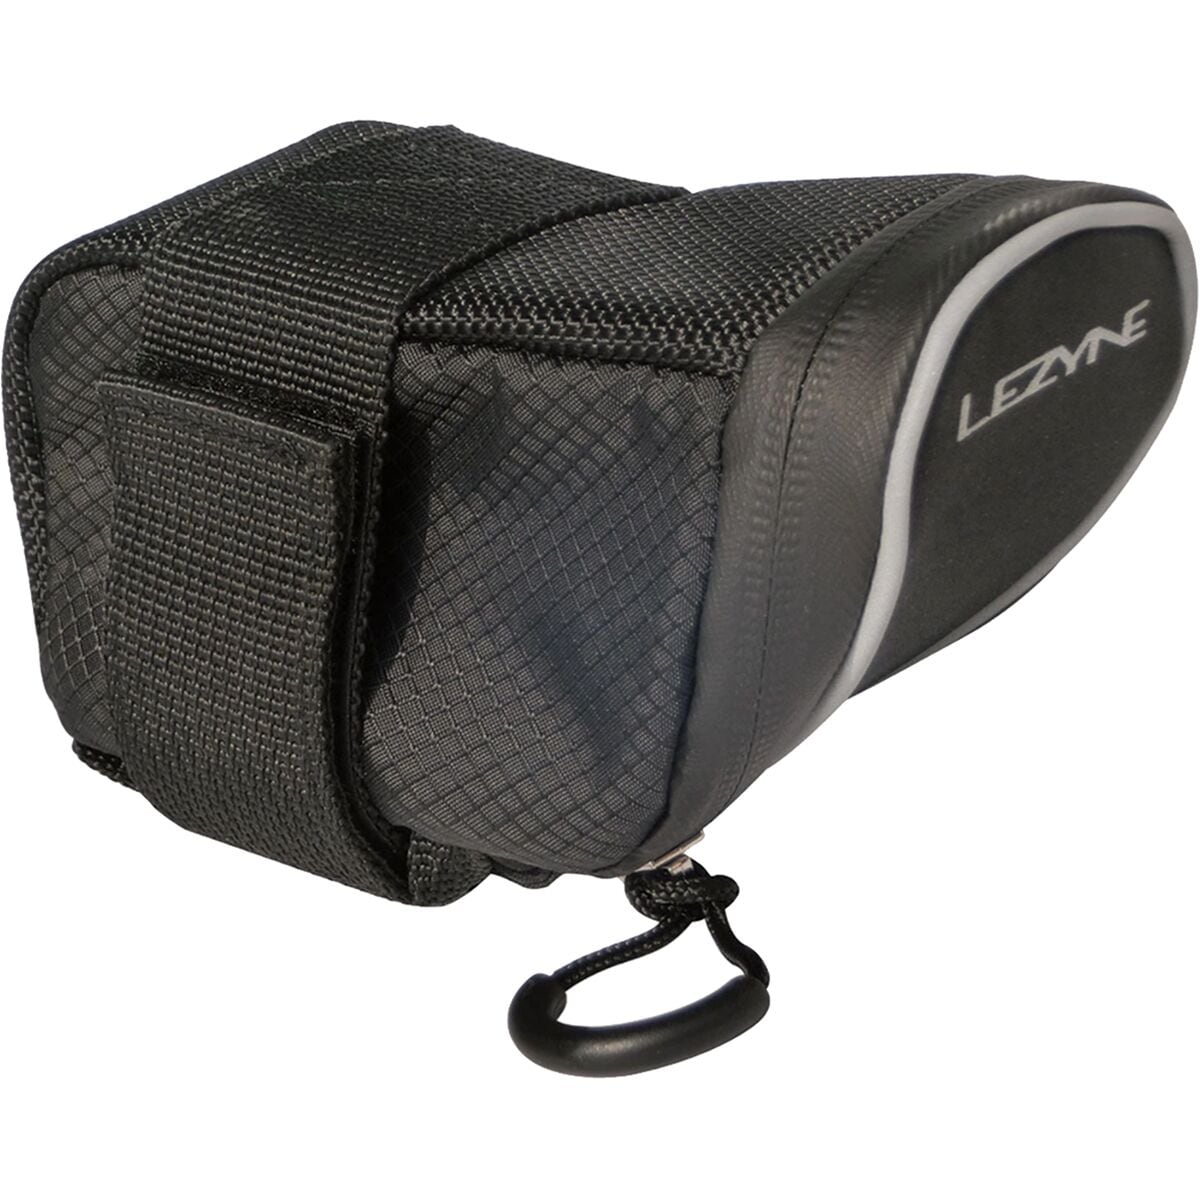 Louis Garneau Groad Seat Pack Bag (Black) (7L)